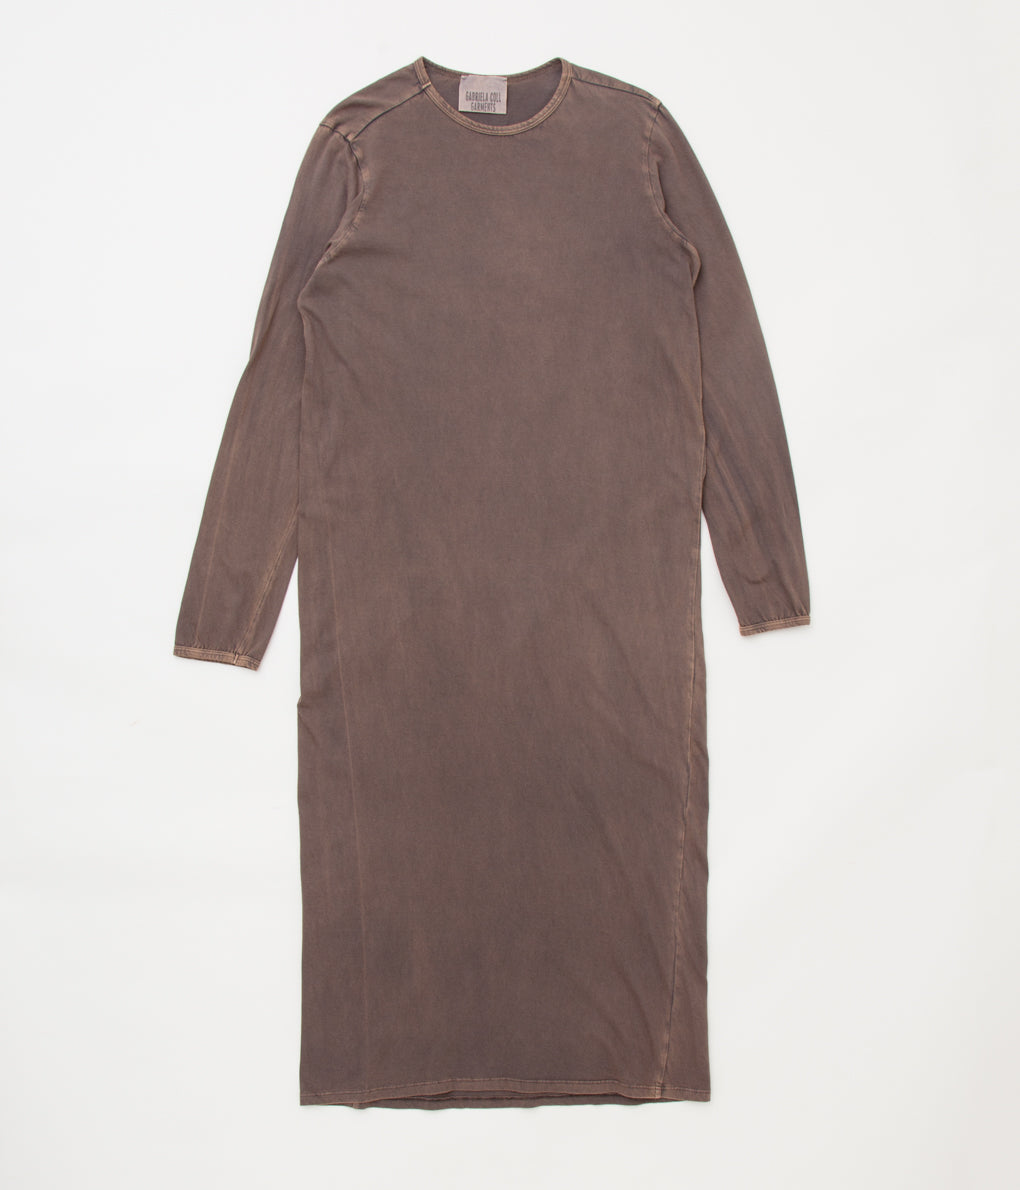 GABRIELA COLL GARMENTS "NO.154 LONG SLEEVE T-SHIRT DRESS"(BLACK SALT WASH)